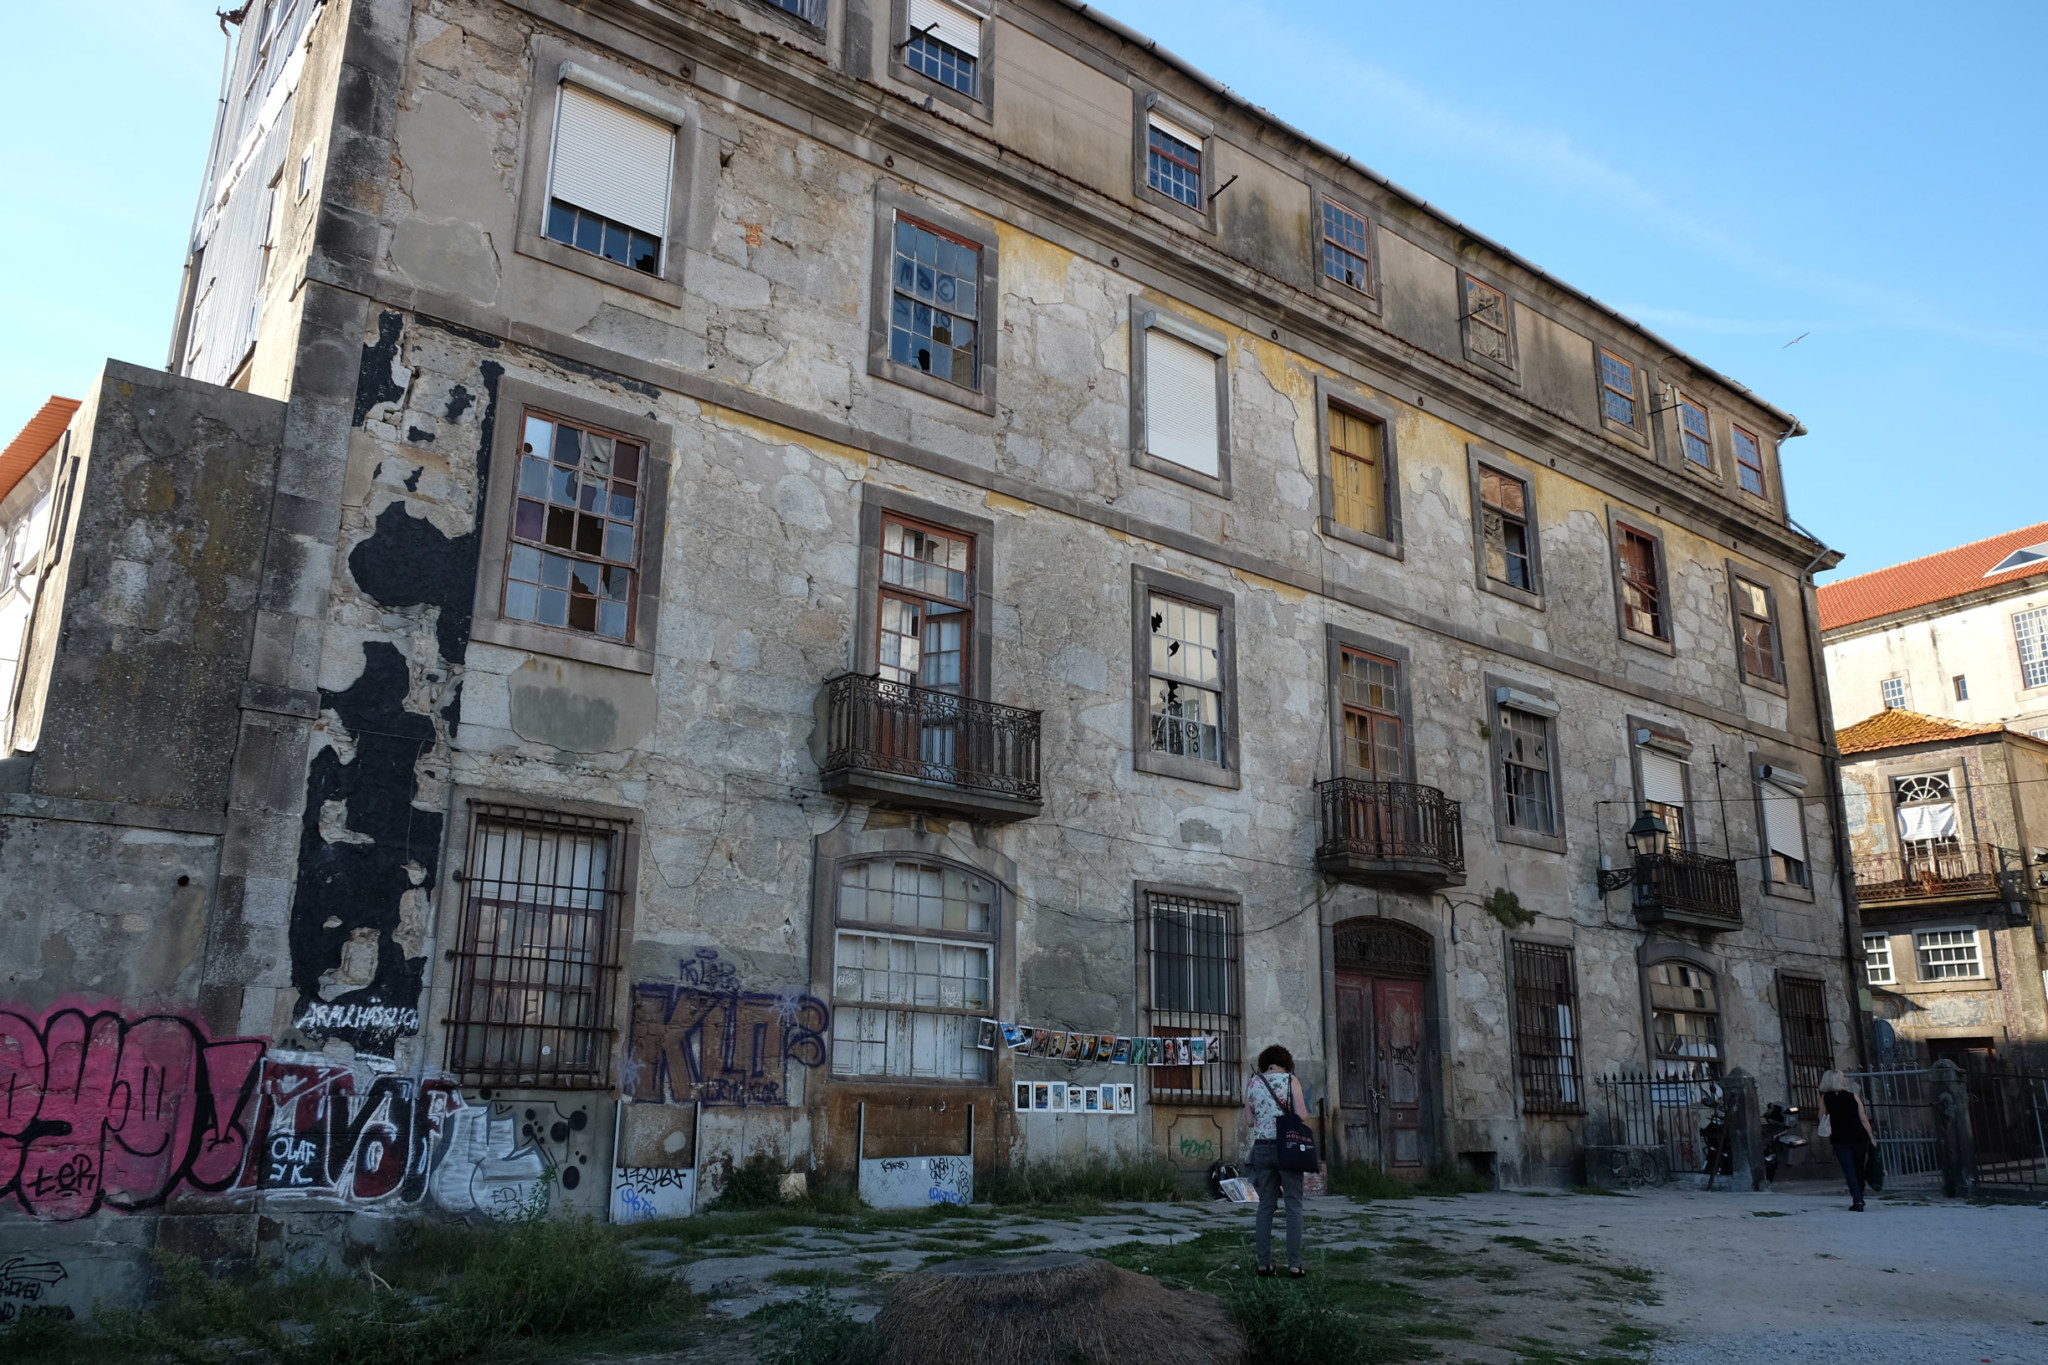 The abandoned building at the Miradouro da Vitoria